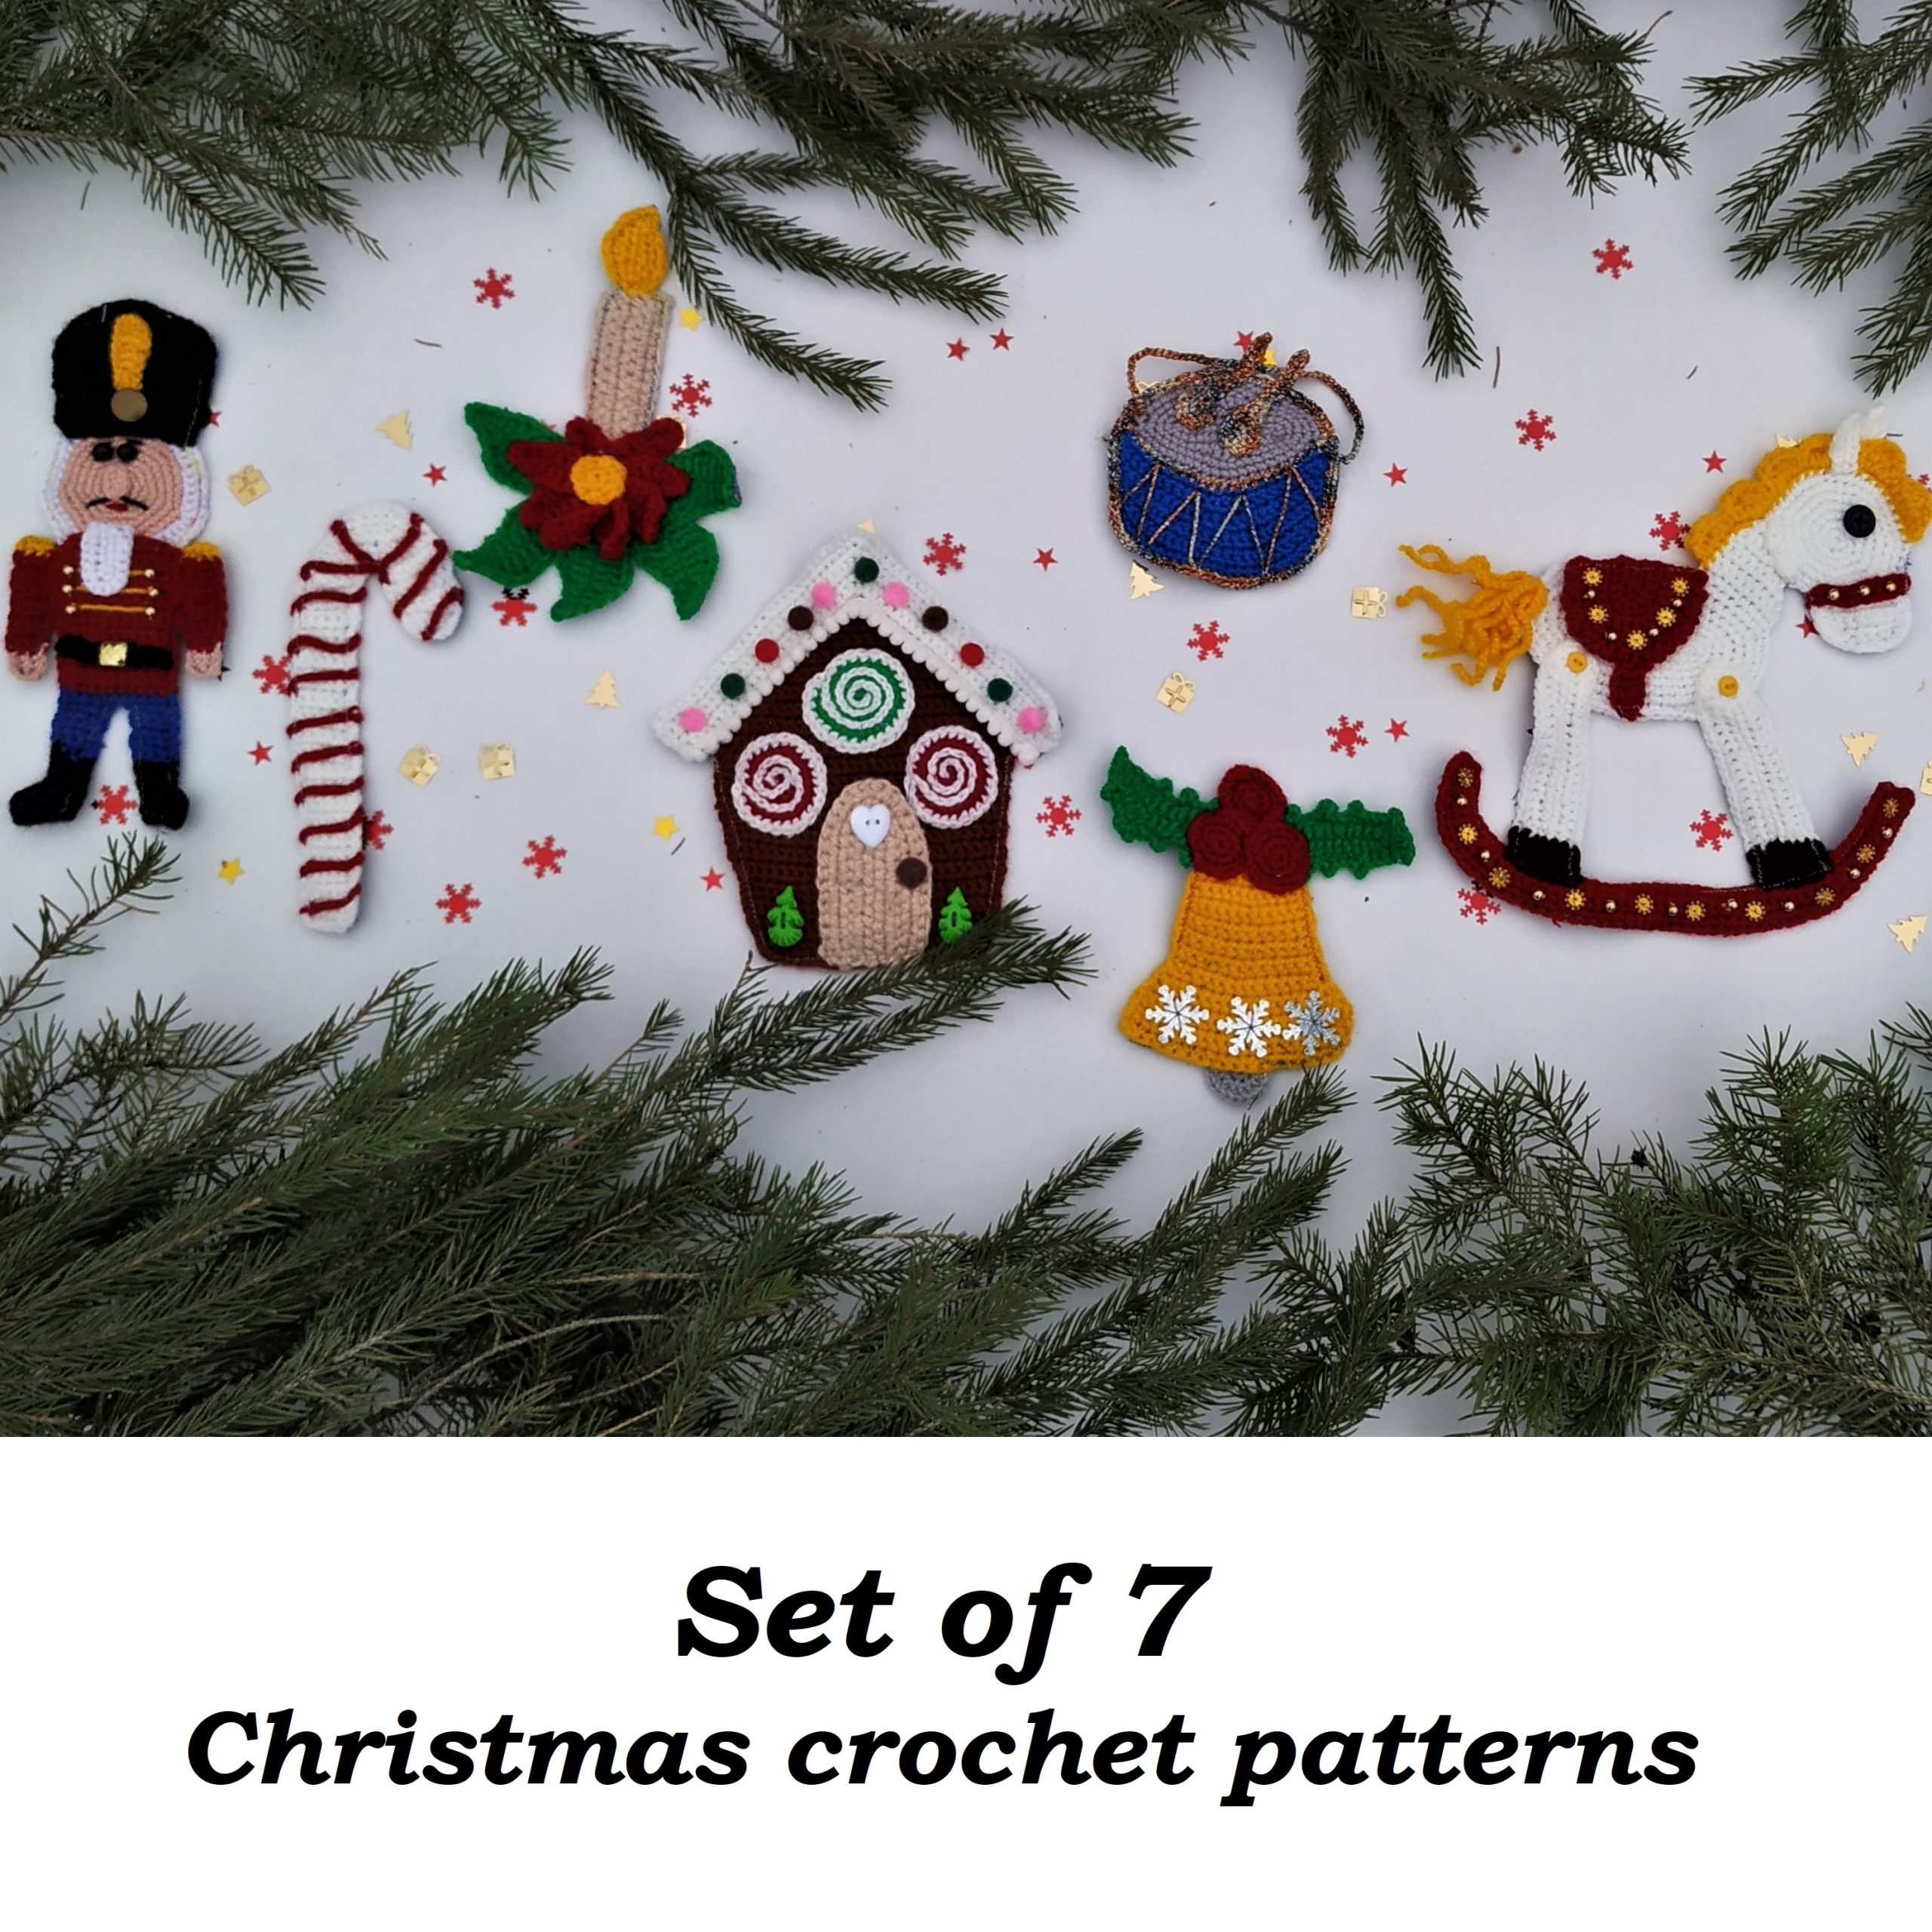 Crochet Christmas applique pattern, Christmas crochet applique pattern, Christmas crochet pattern